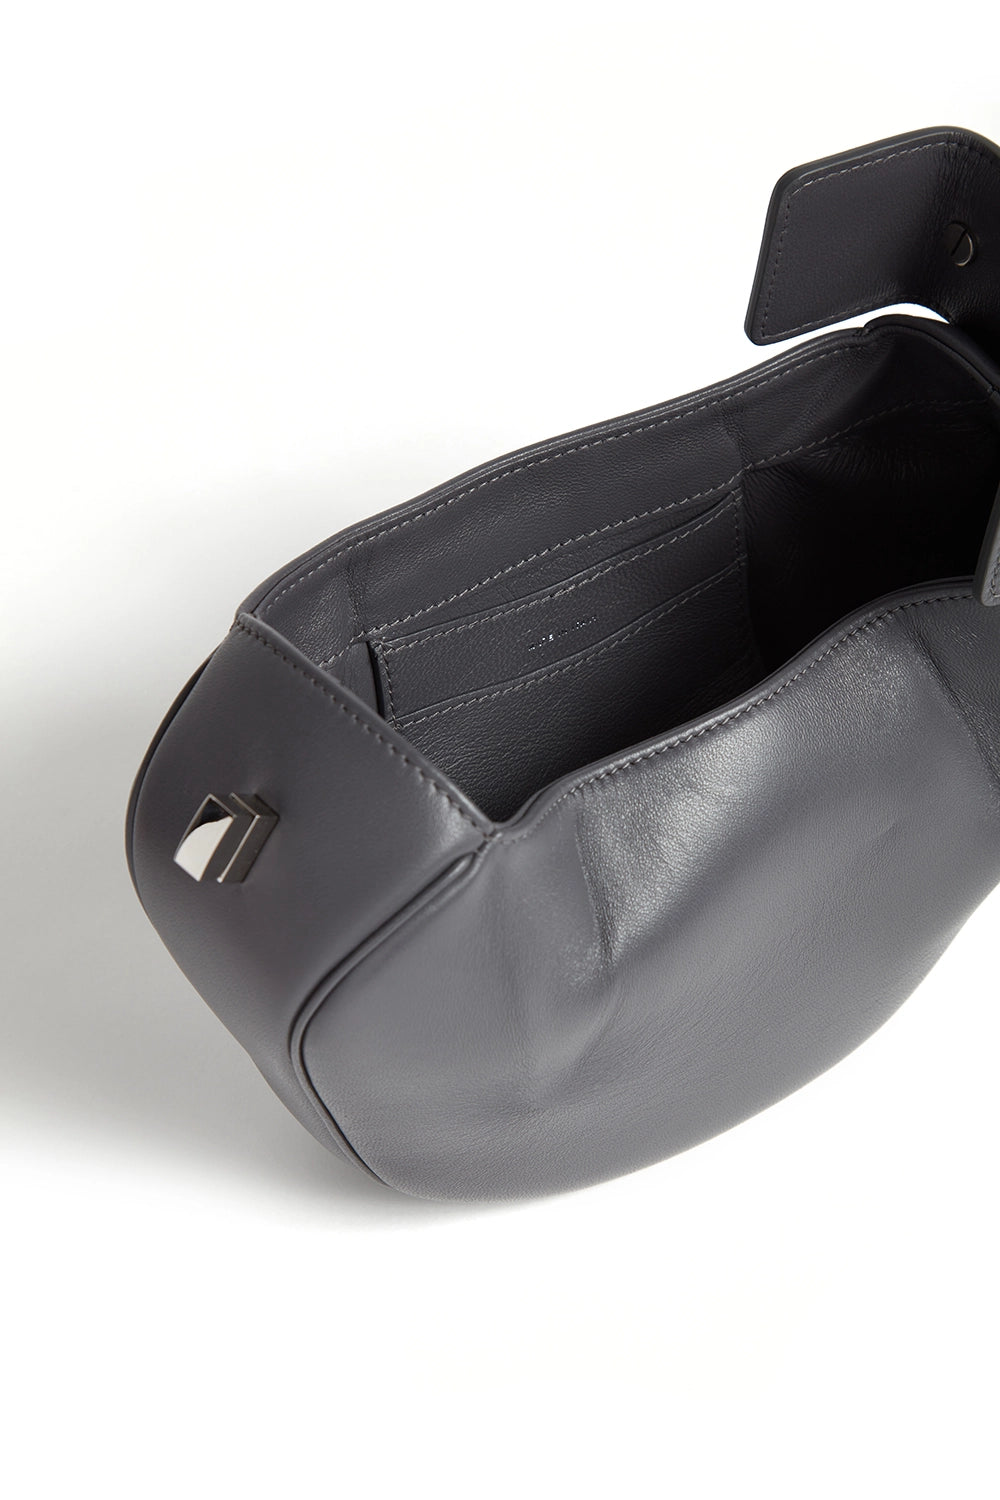 Demi Bag in Charcoal Nappa Leather